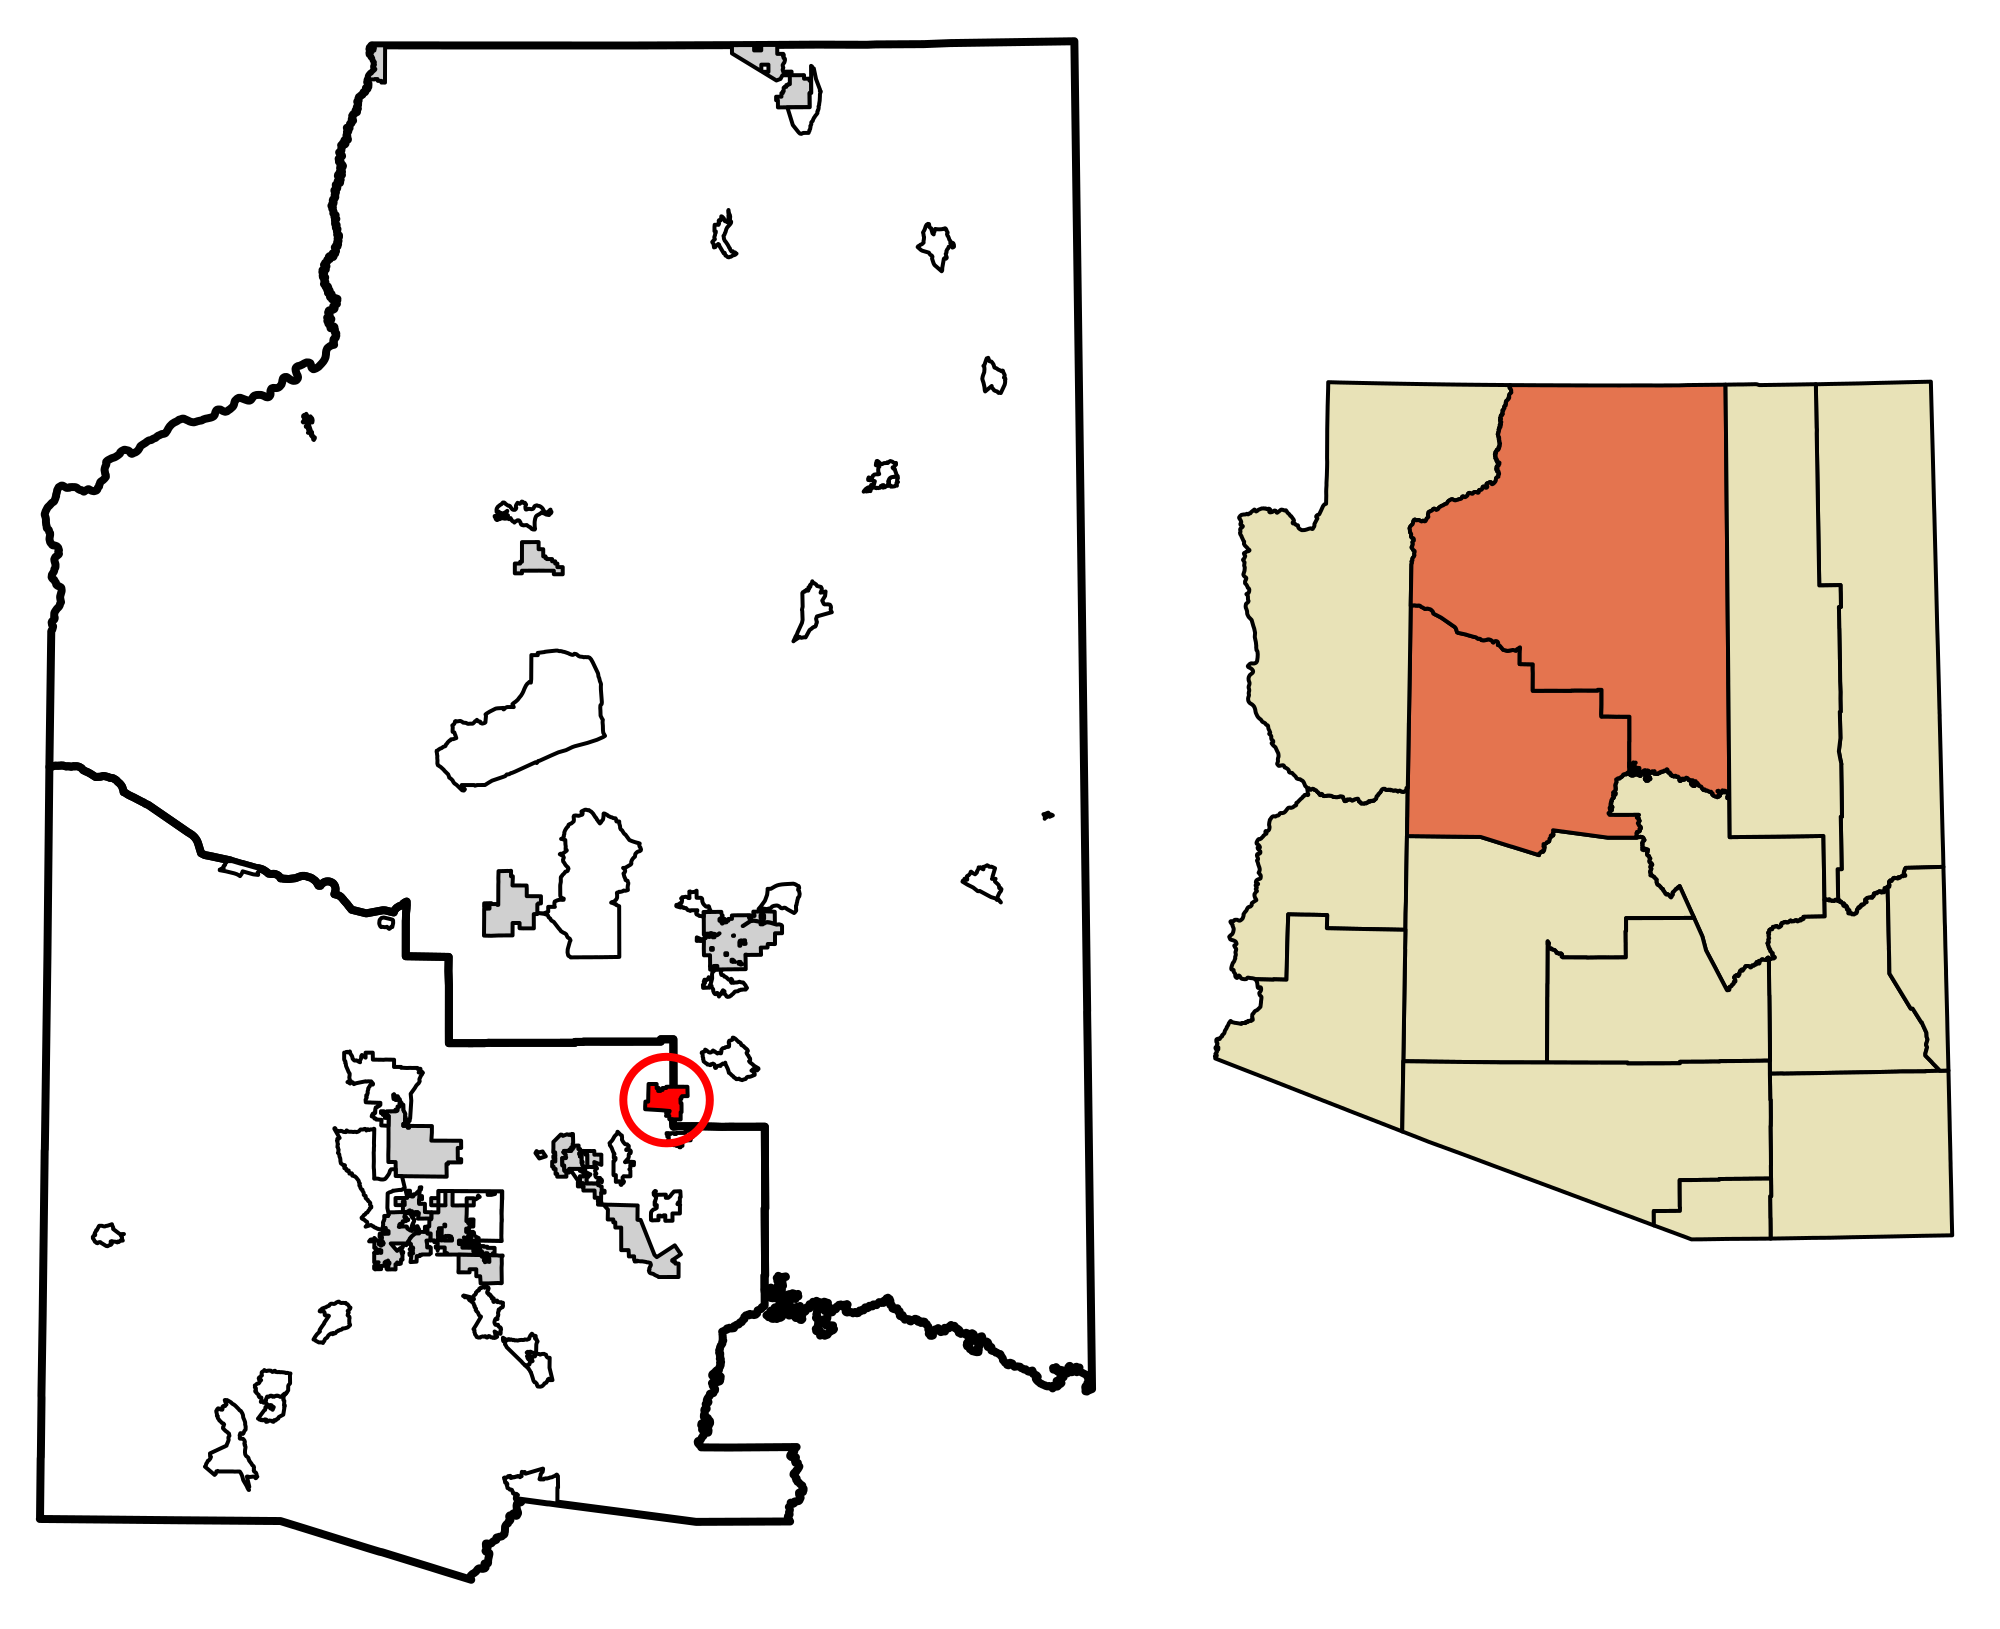 Sedona Arizona Wikipedia - code roblox jailbreak 2019 wiki